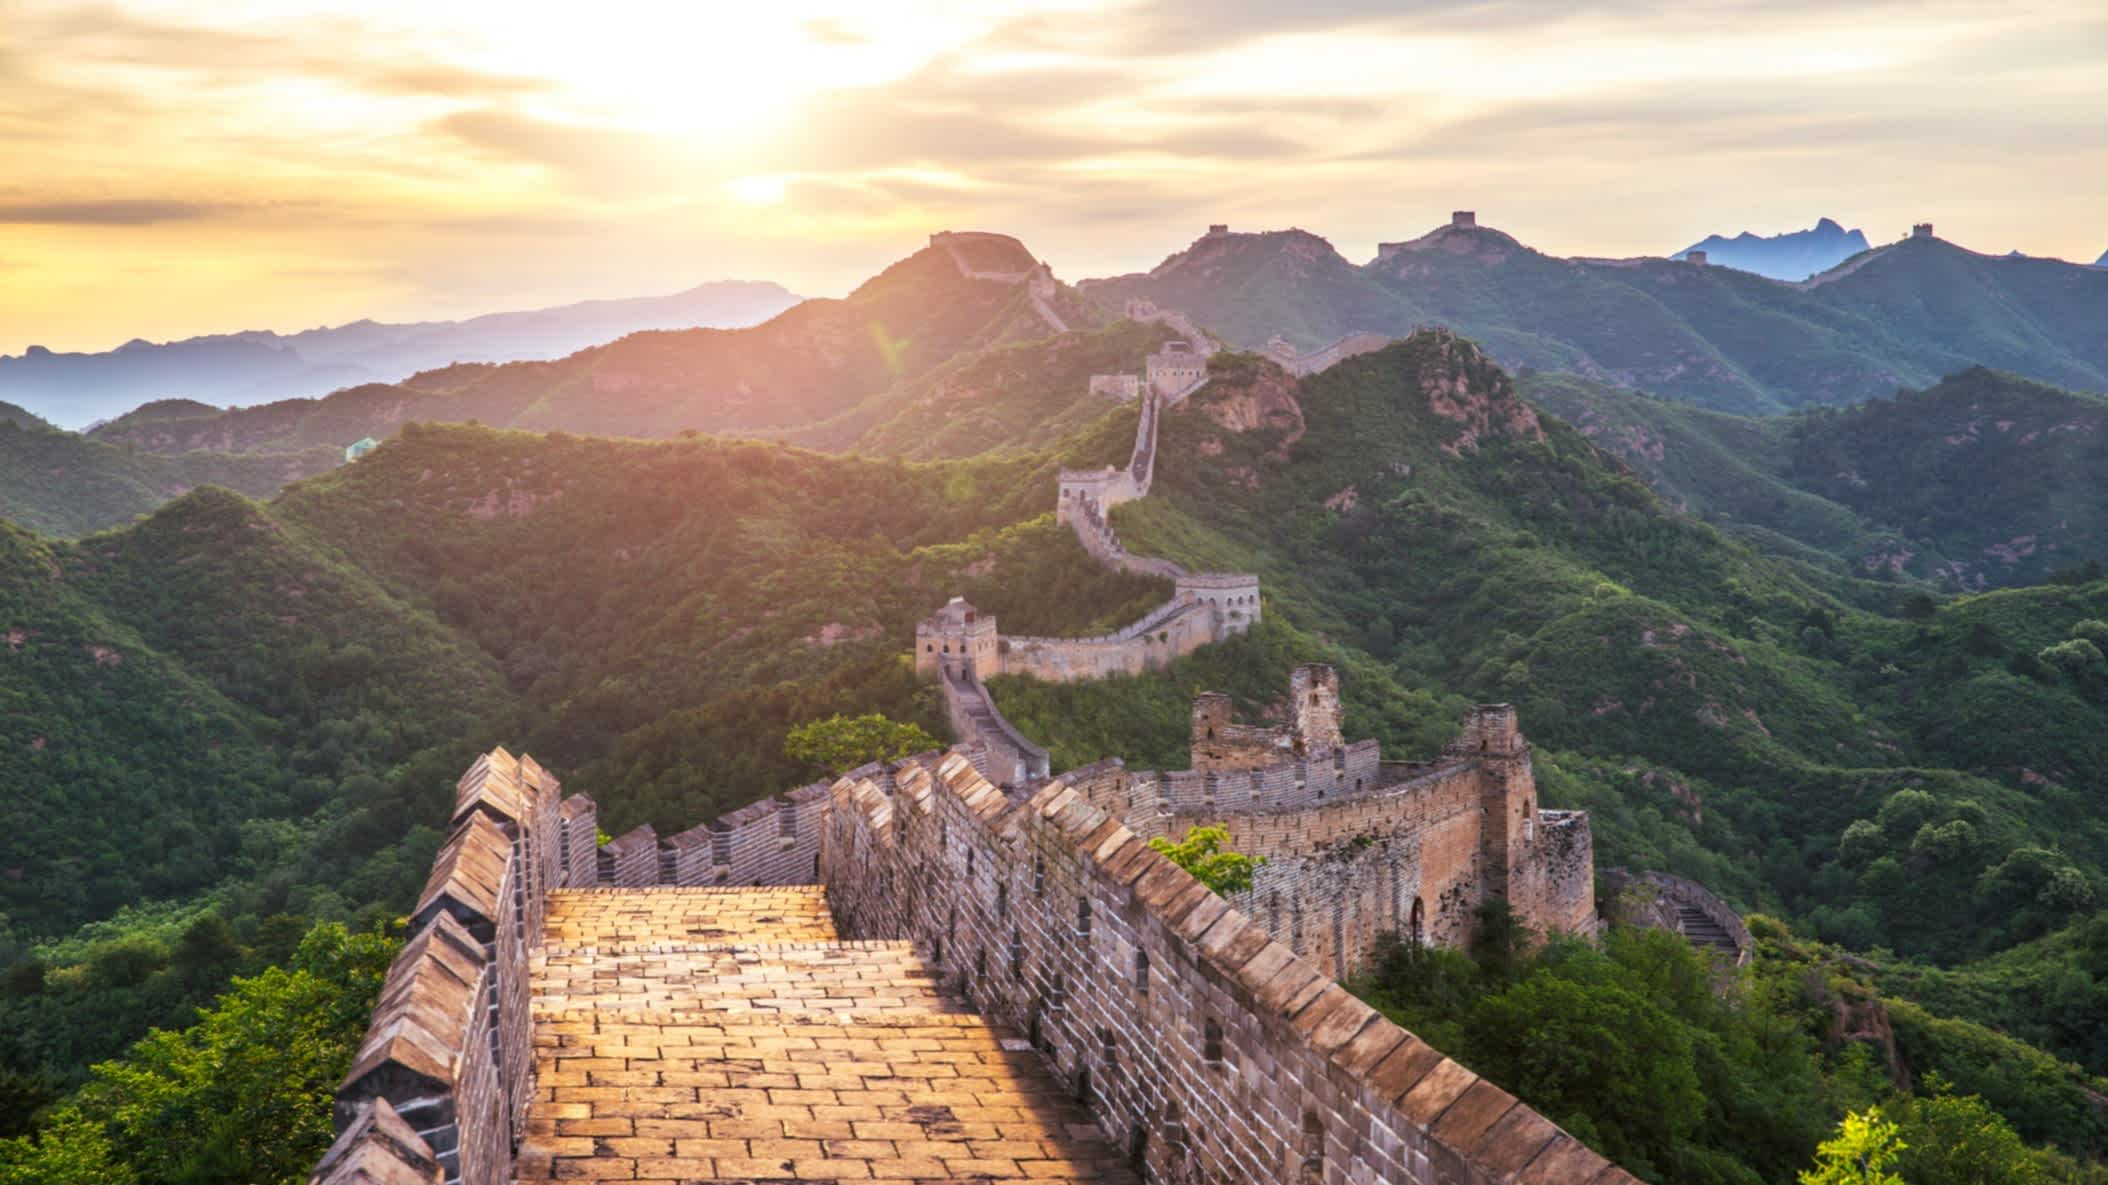 View of the Great Wall of China at sunrise, China